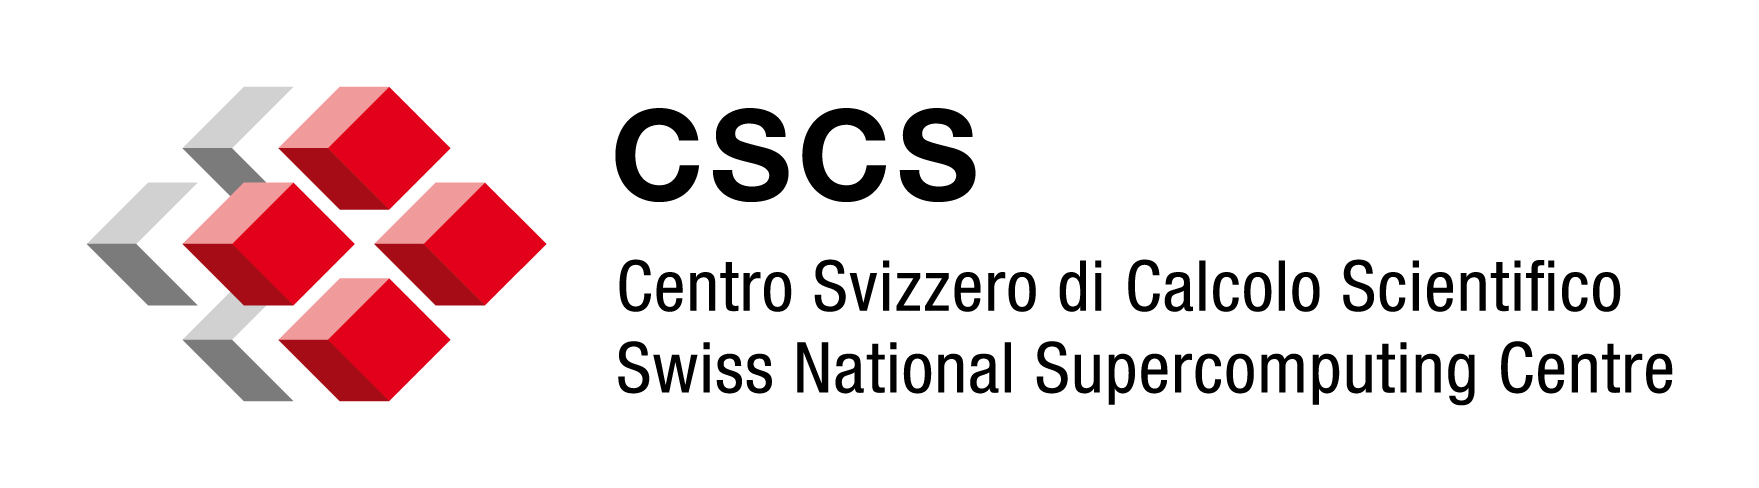 cscs-logo.jpg